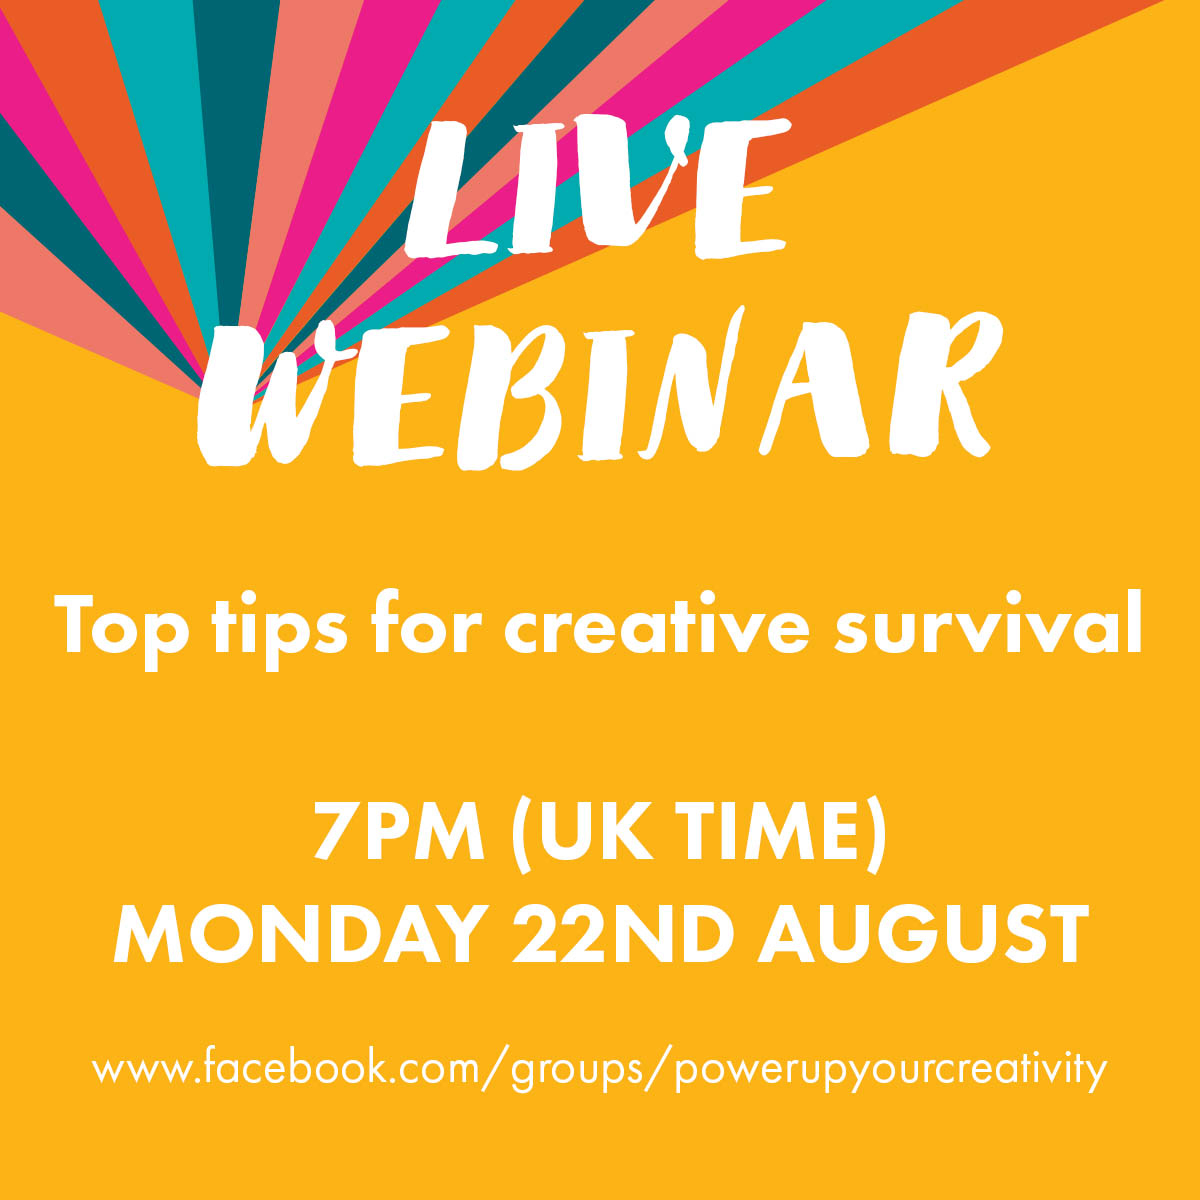 LIVE WEBINAR Top tips for creative survival